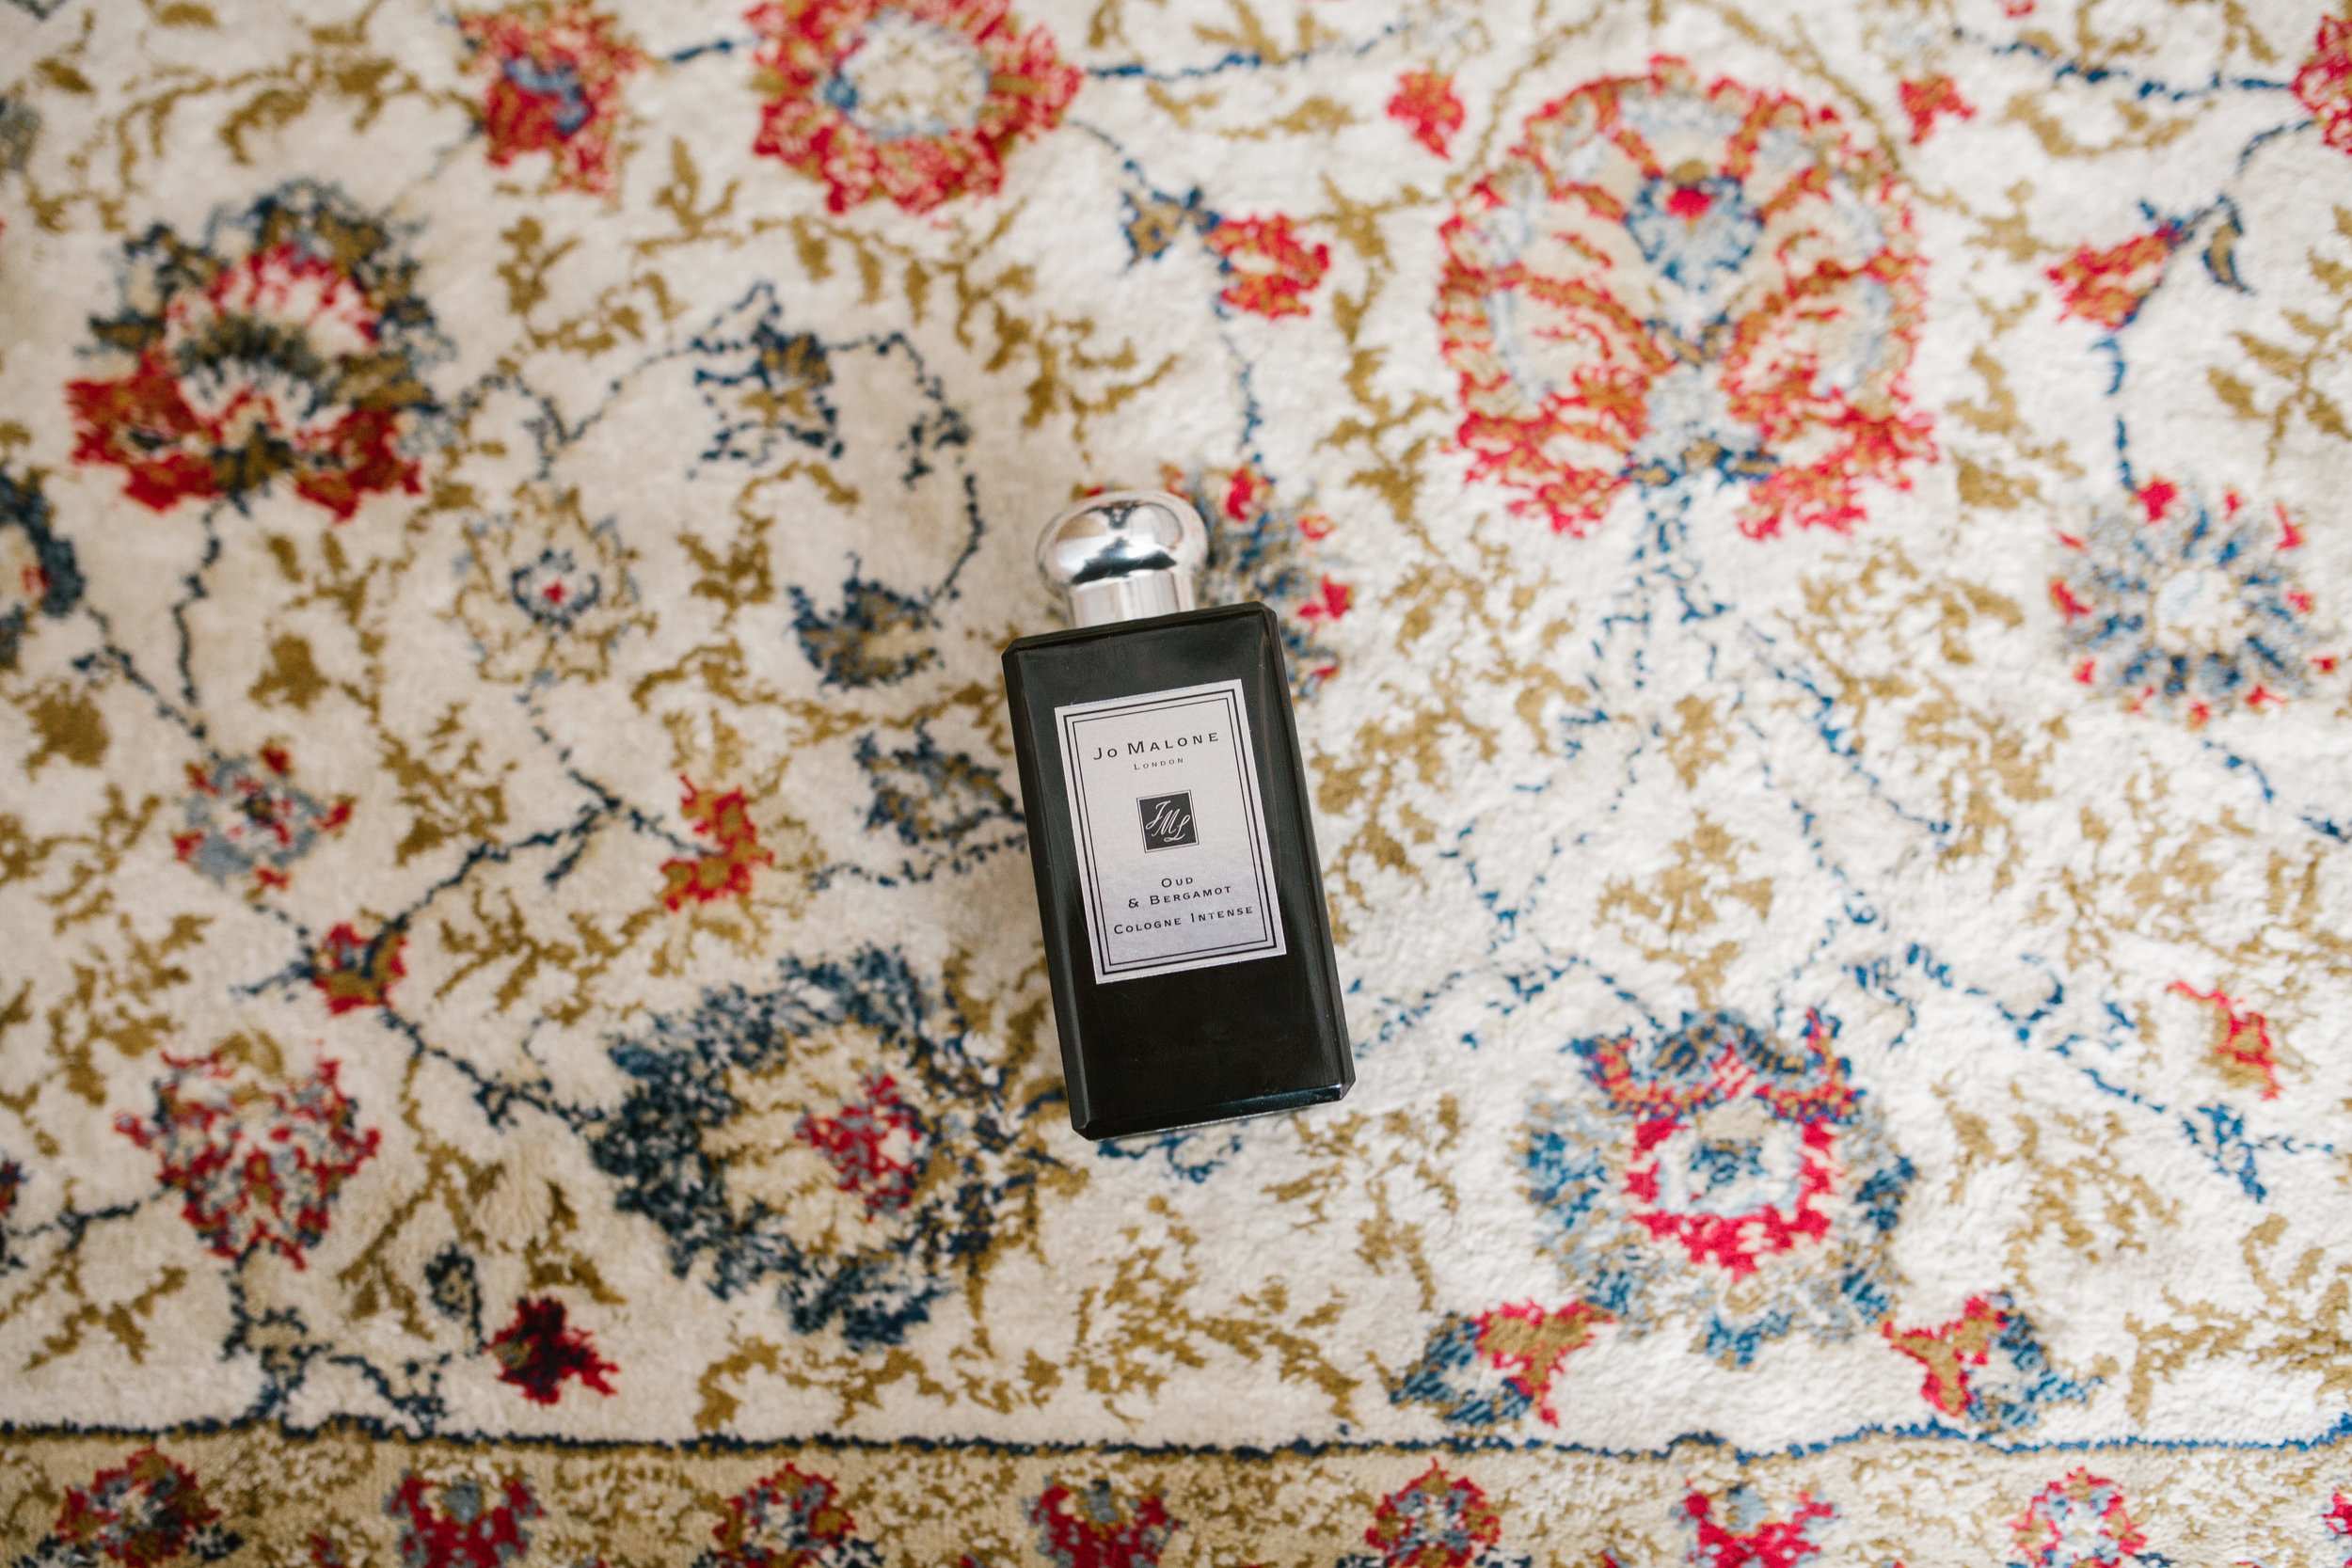 jo malone perfume on patterned carpet